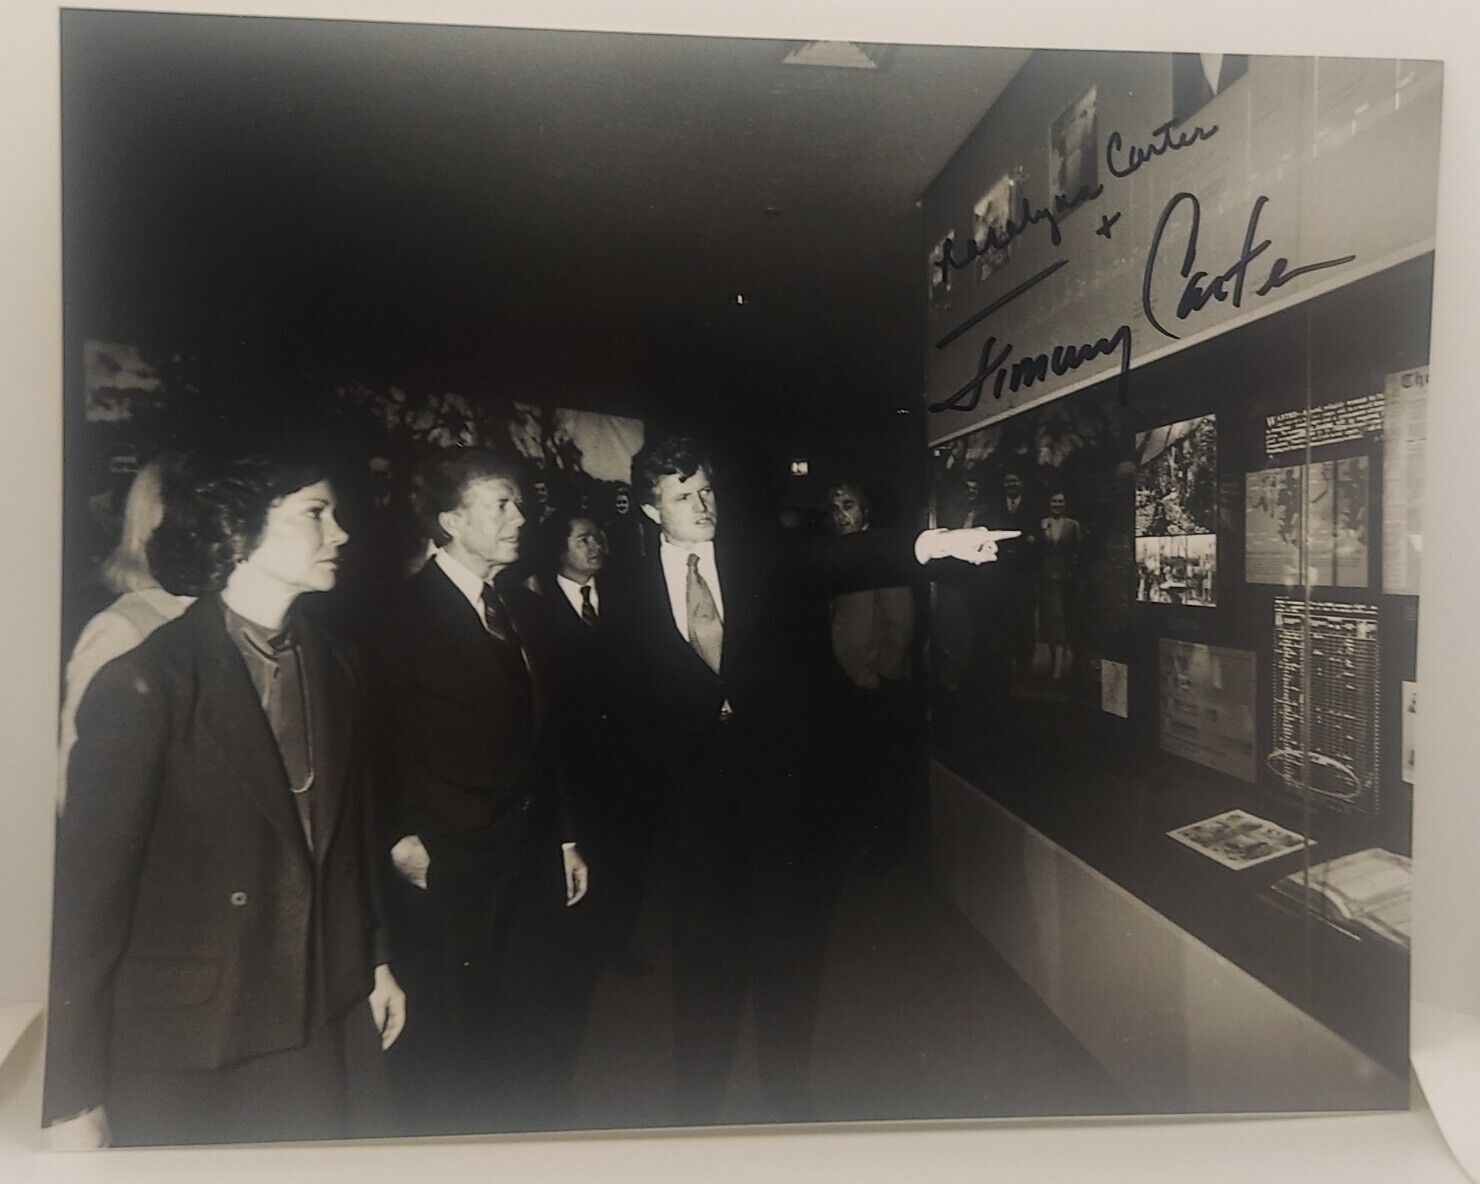  Jimmy Carter & Rosalynn Carter Signed 8x10 Photo w/ Sen. Ted Kennedy